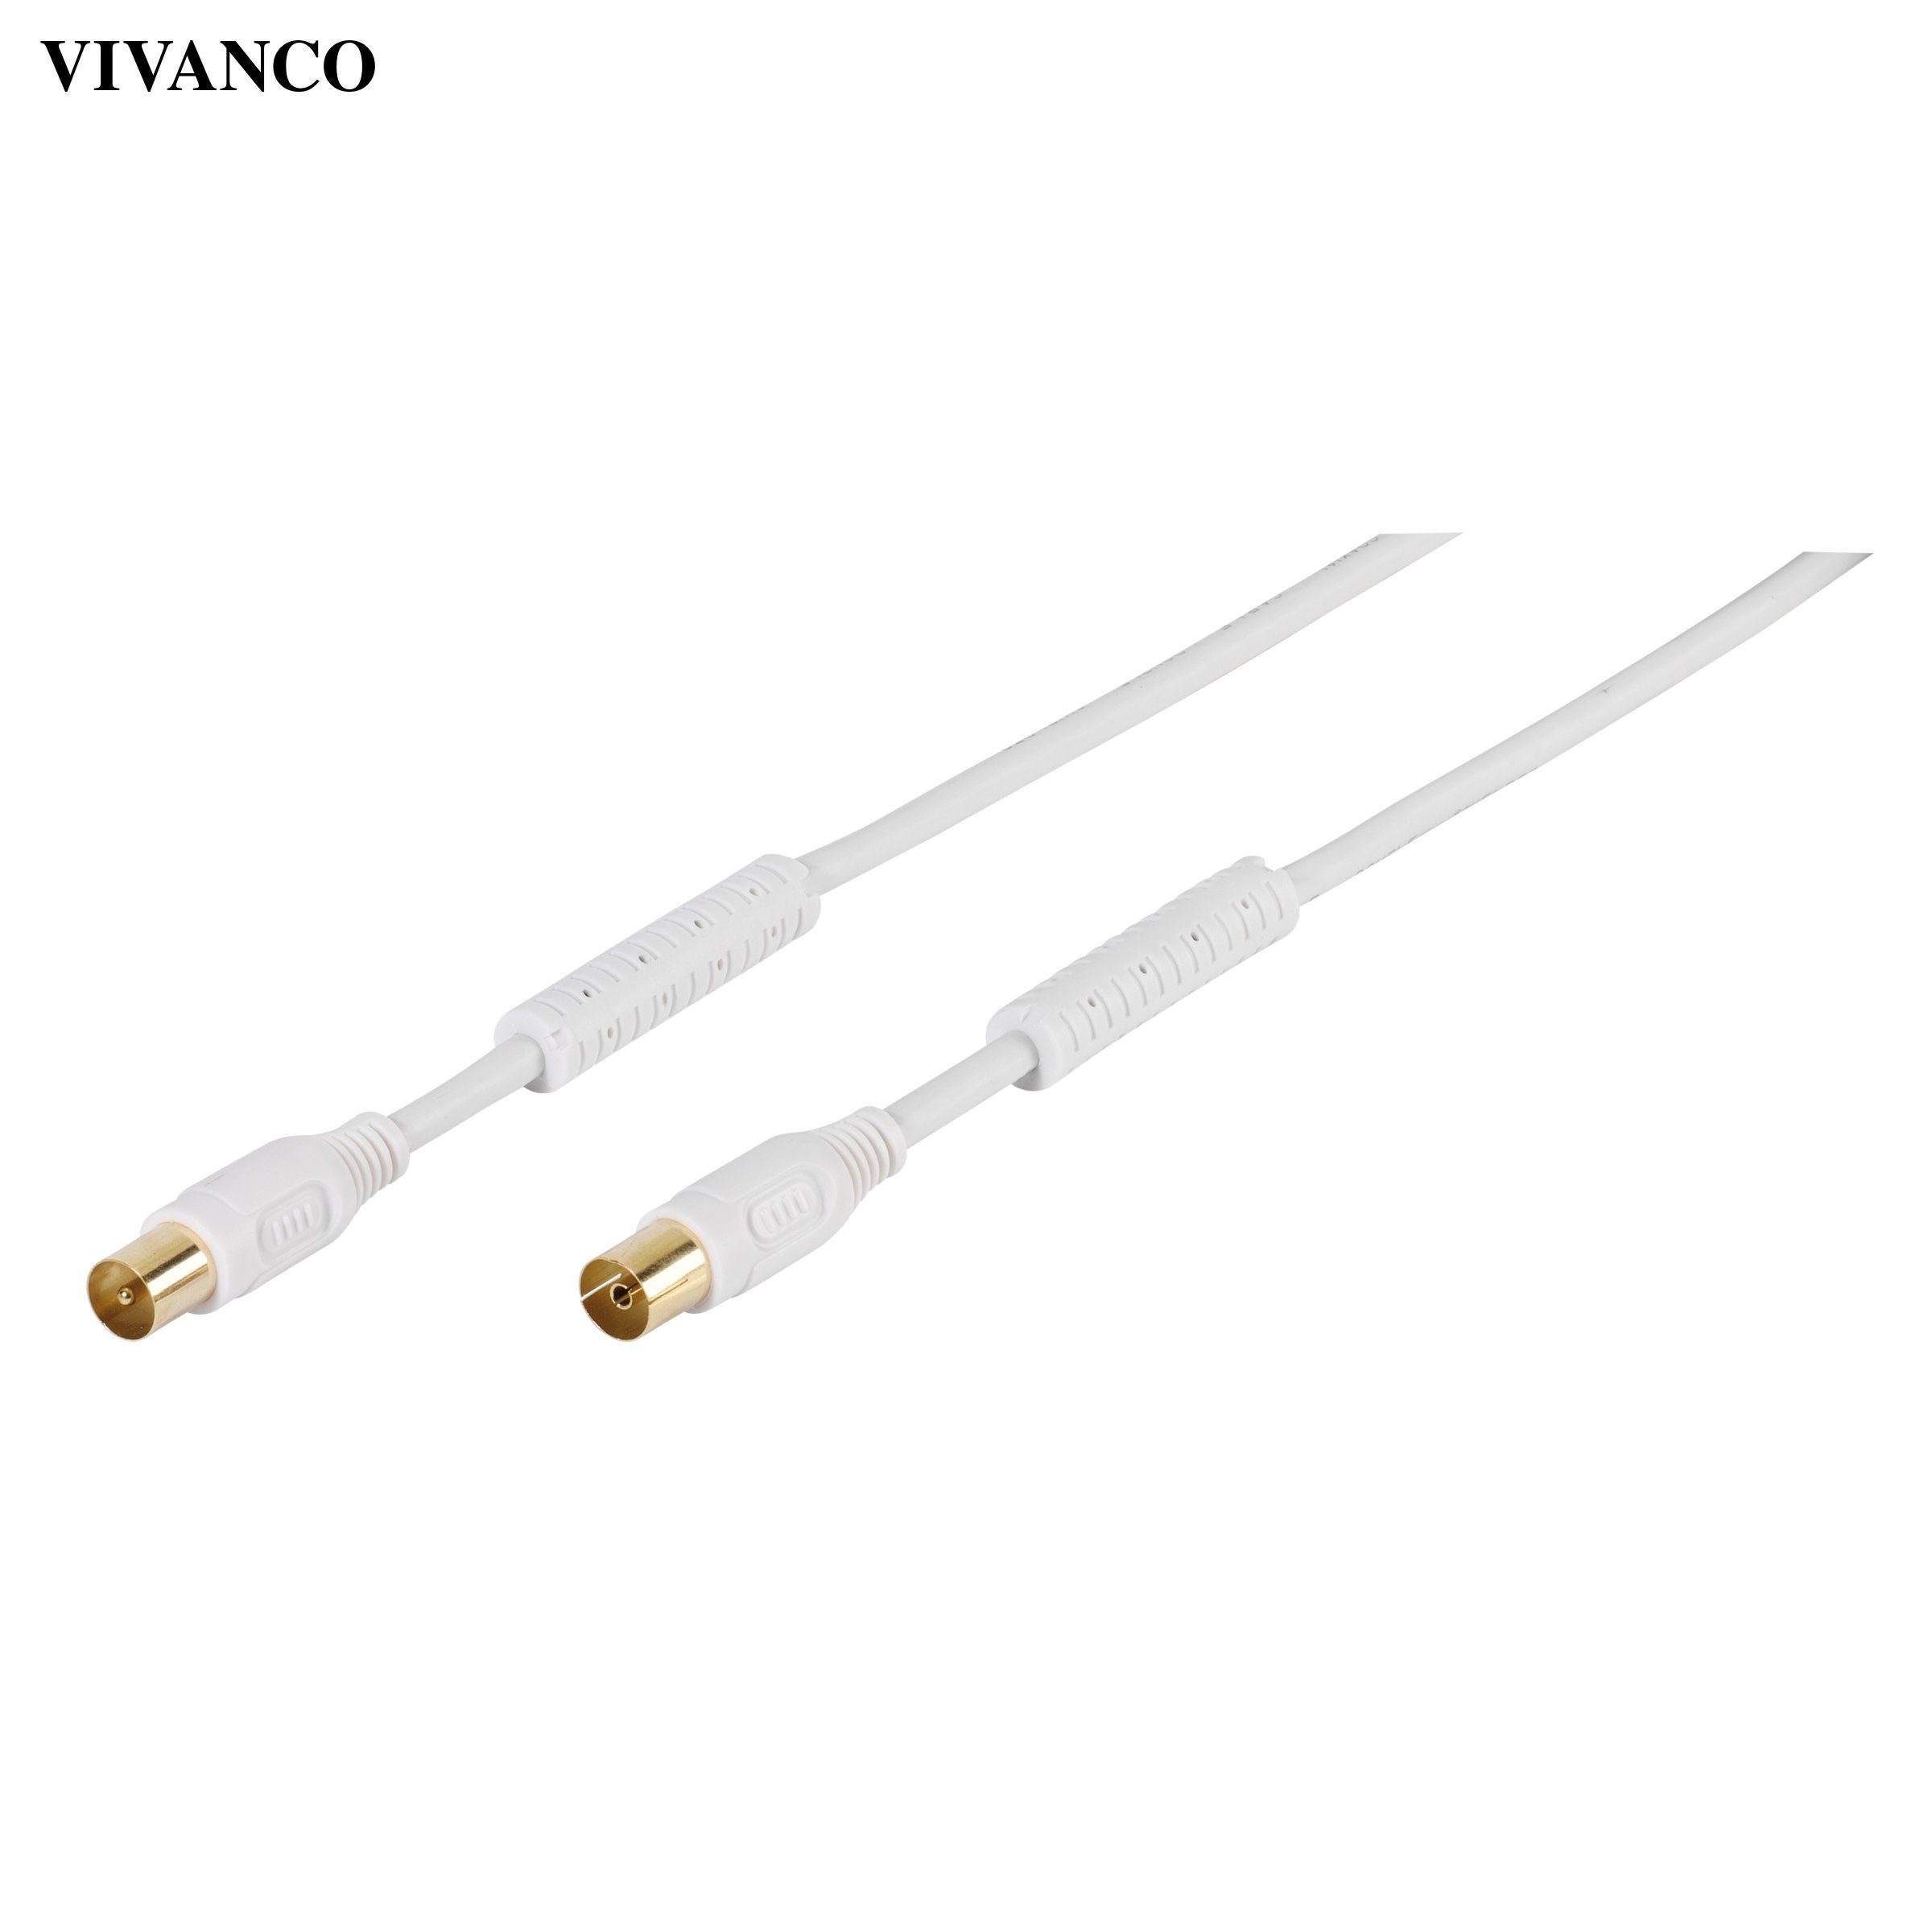 Vivanco Video-Kabel, 100dB Antennenkabel, vergoldet